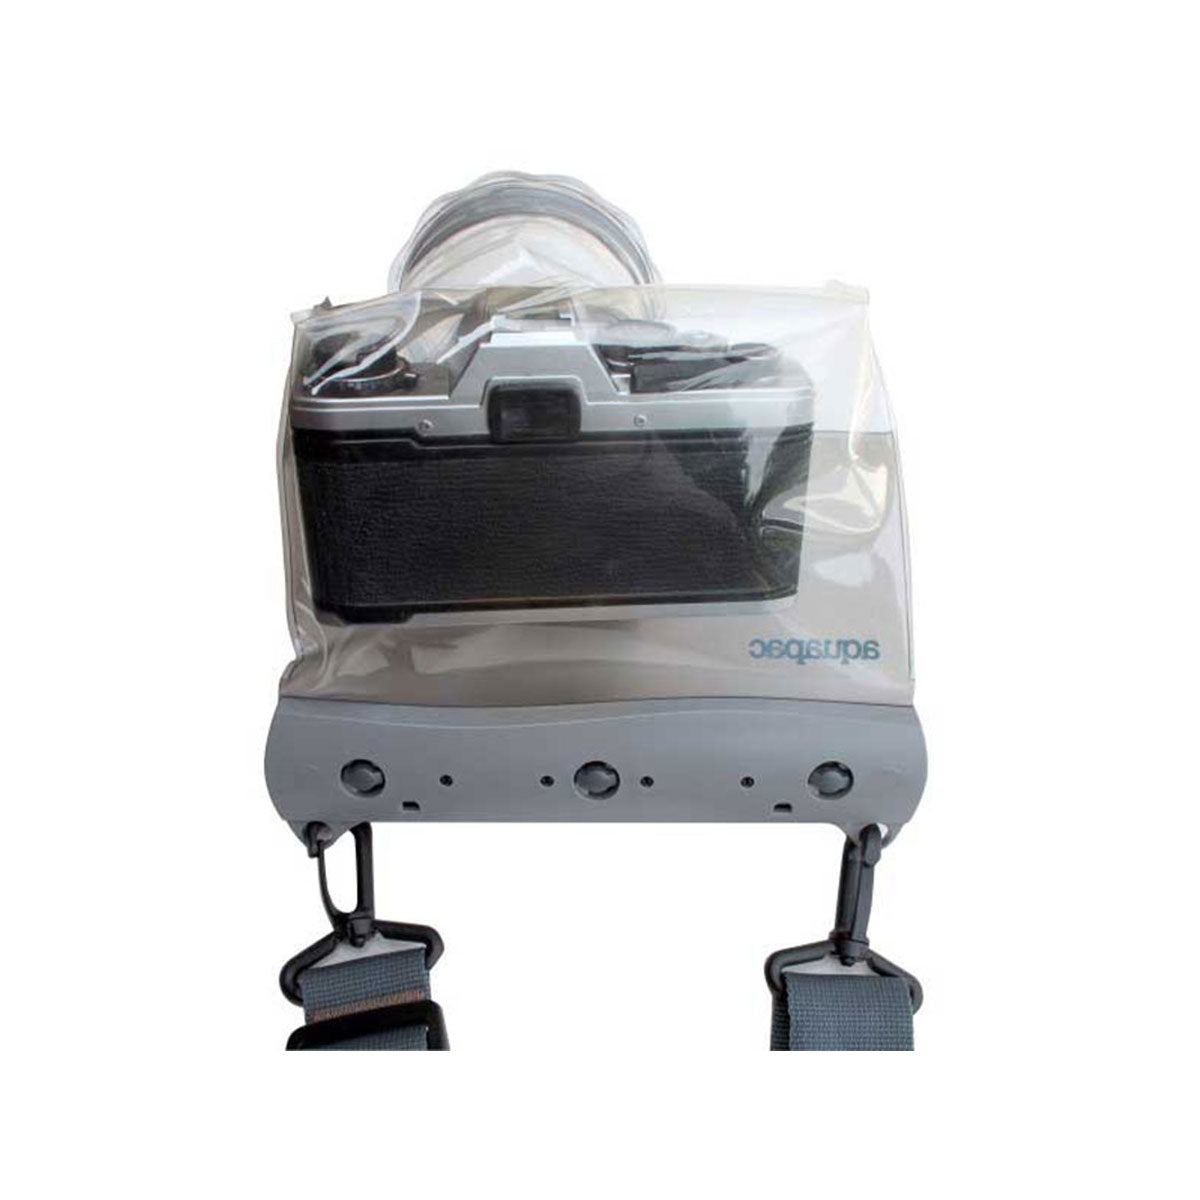 Aquapac Waterproof Compact System Camera Case - Outdoor Travel Gear 5